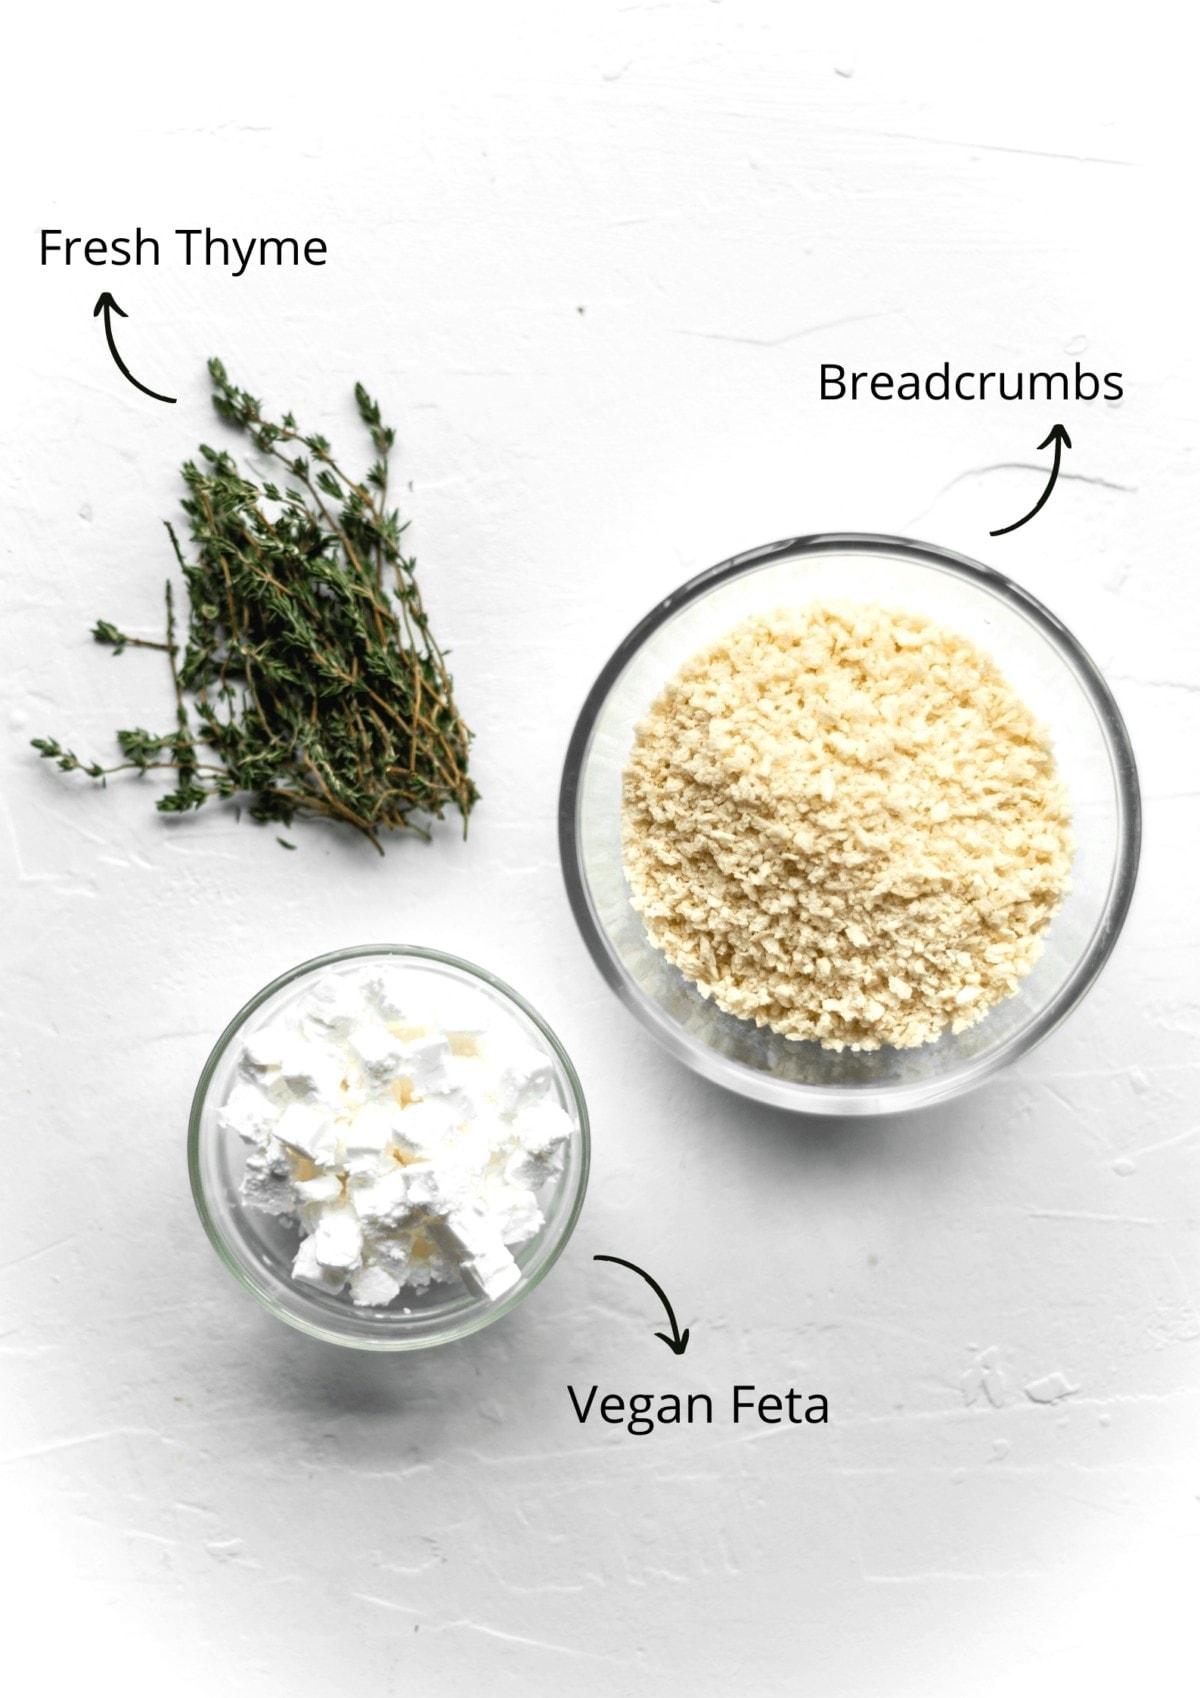 Overhead view of the vegan feta crumb ingredients.